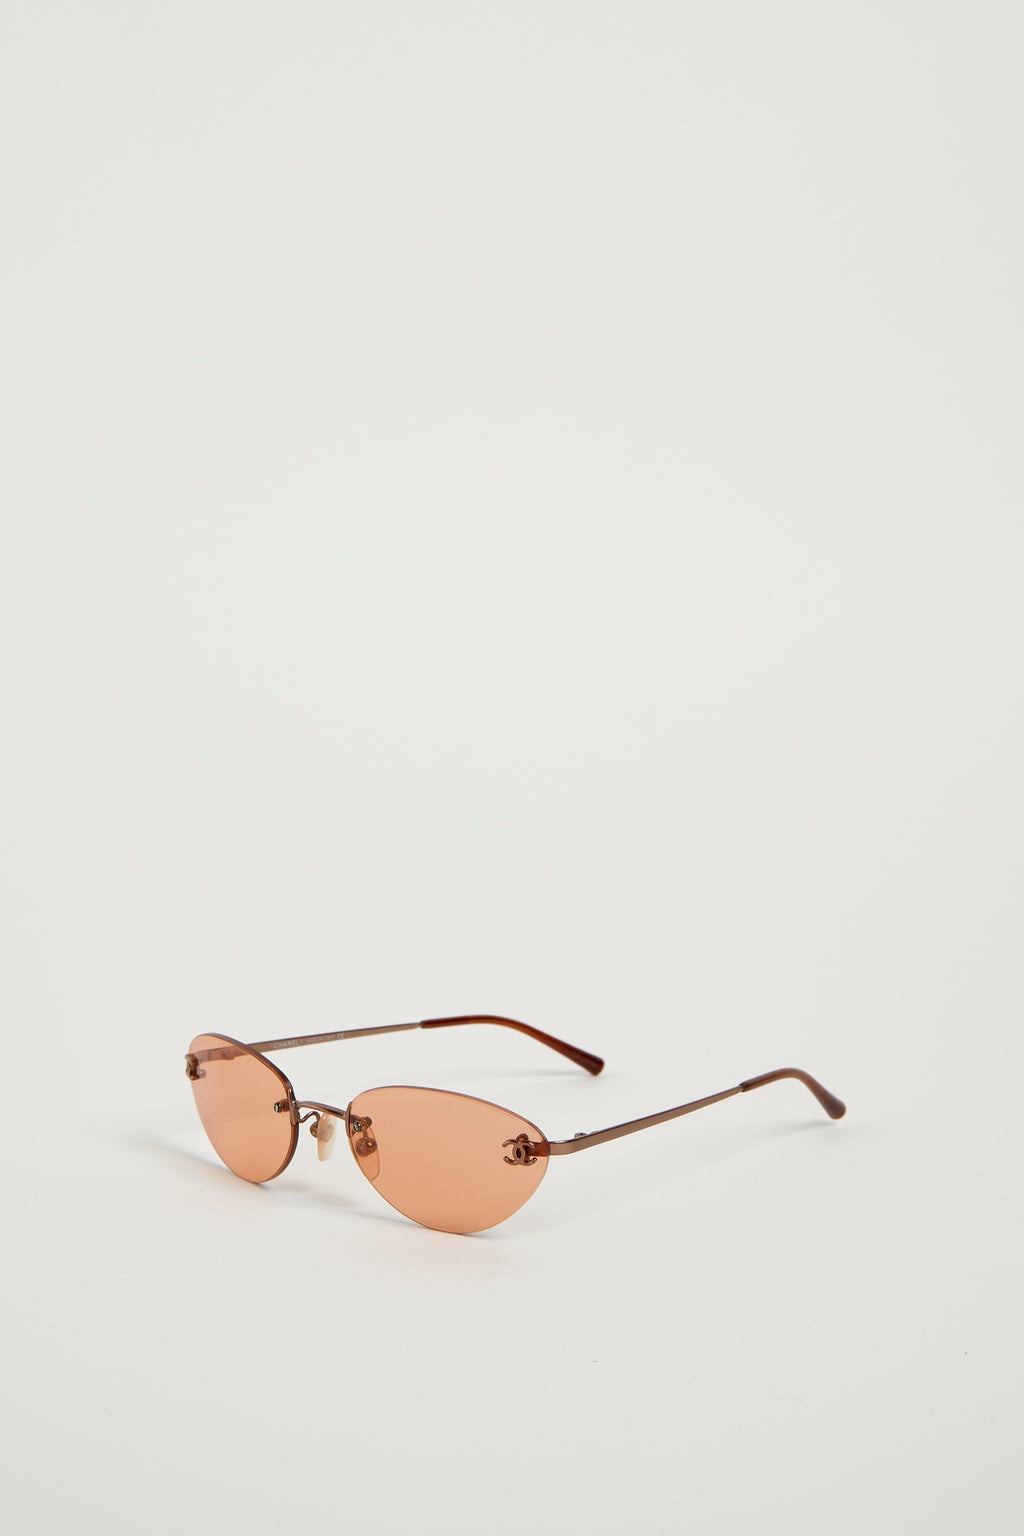 2000s Chanel Orange Oval CC Sunglasses